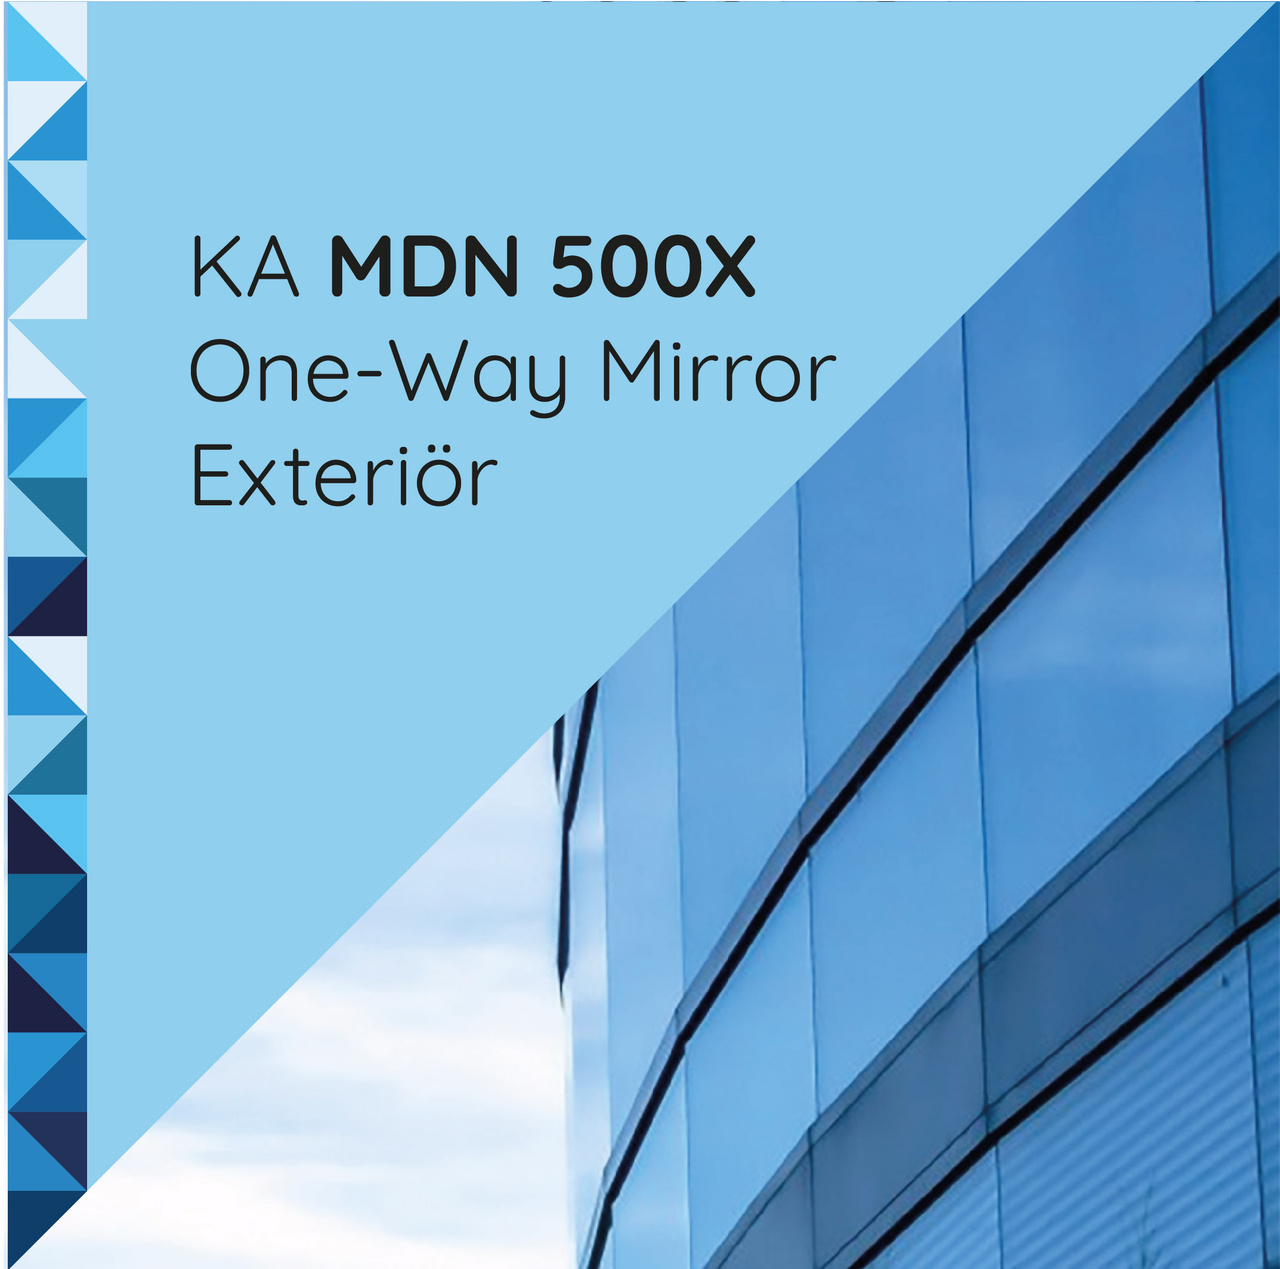 KA MDN 500X Exterior